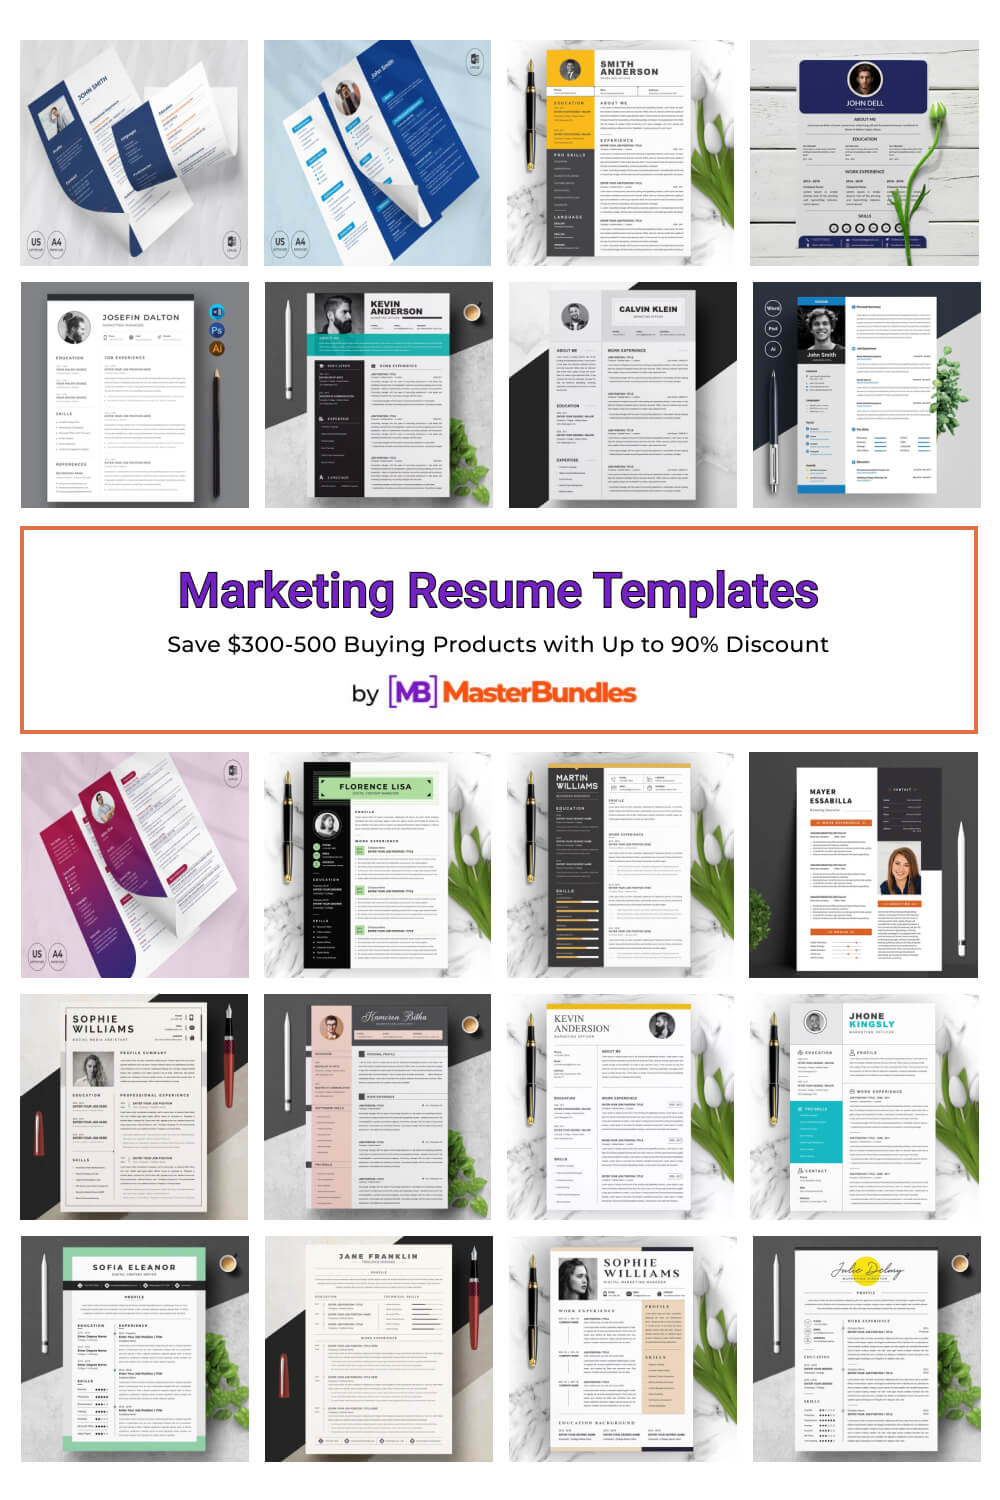 marketing resume templates pinterest image.